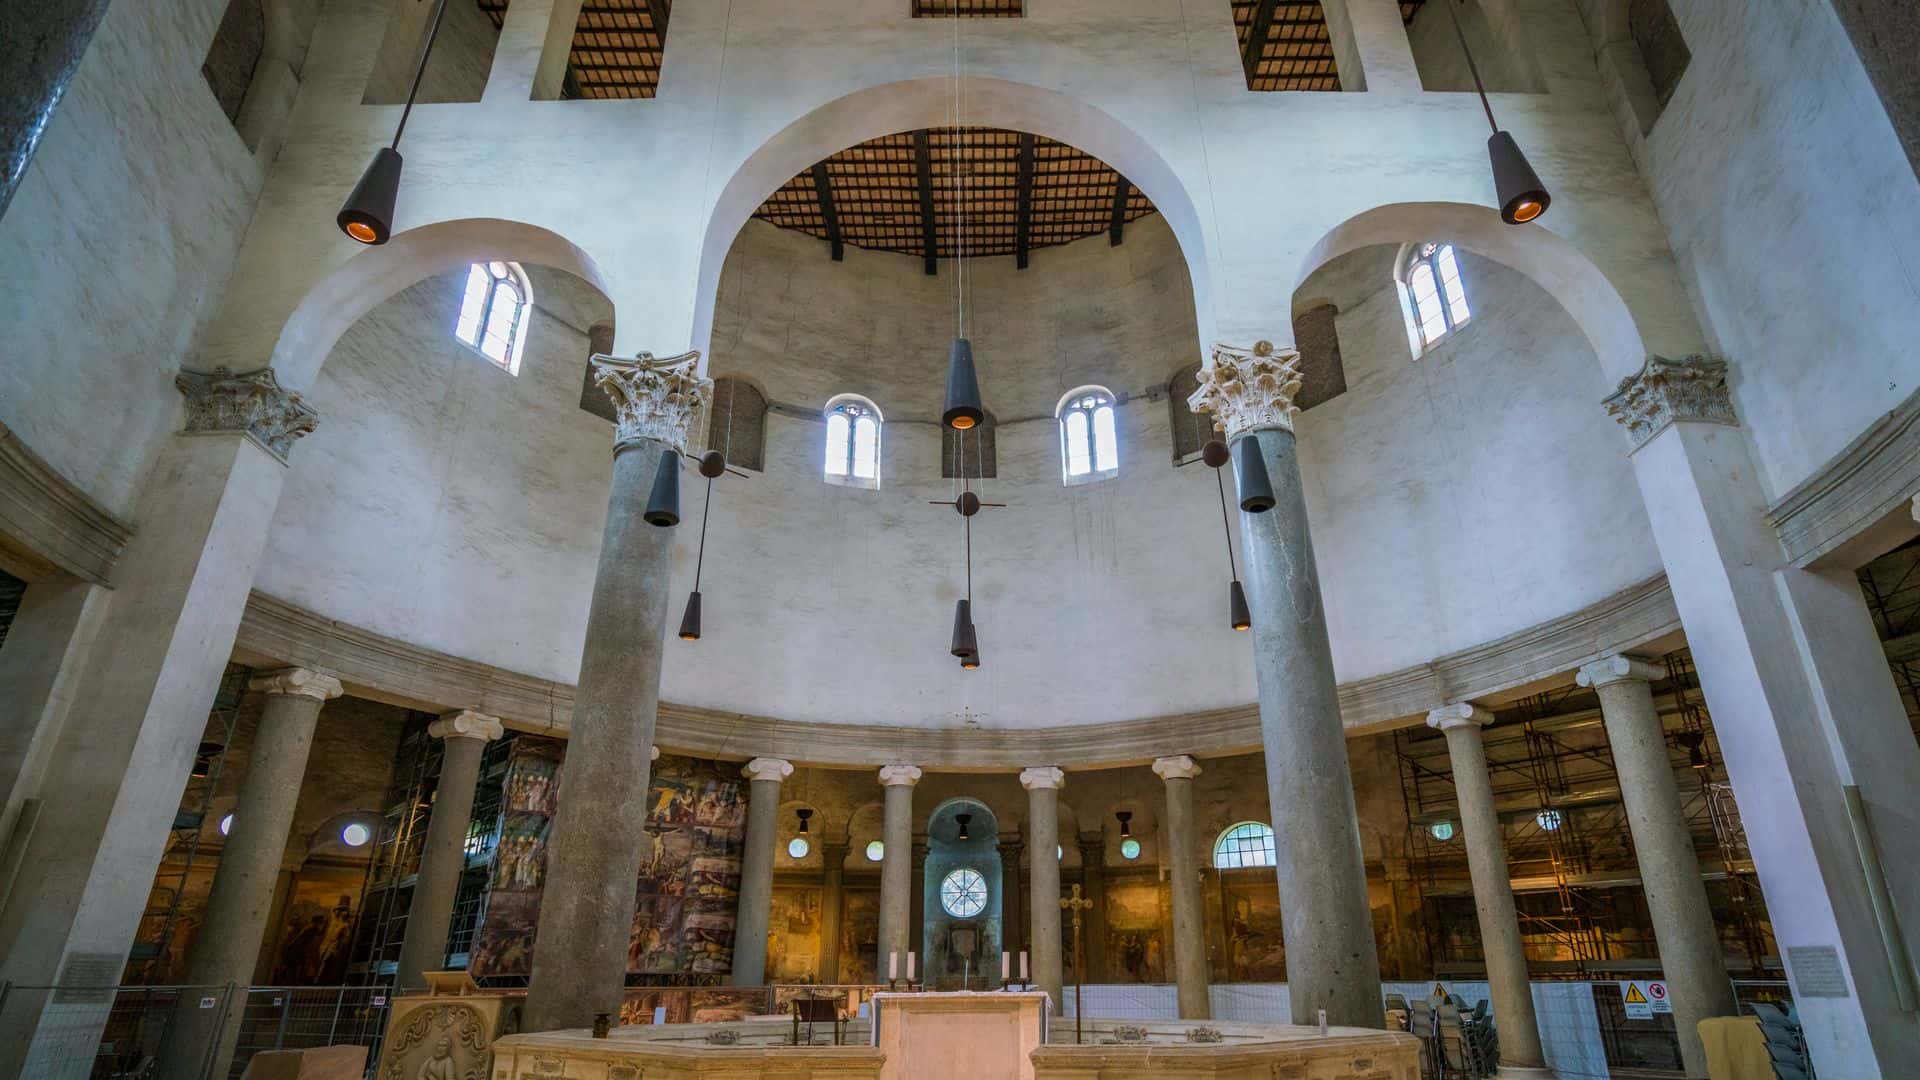 The interior of Santo Stefano Rotondo church.